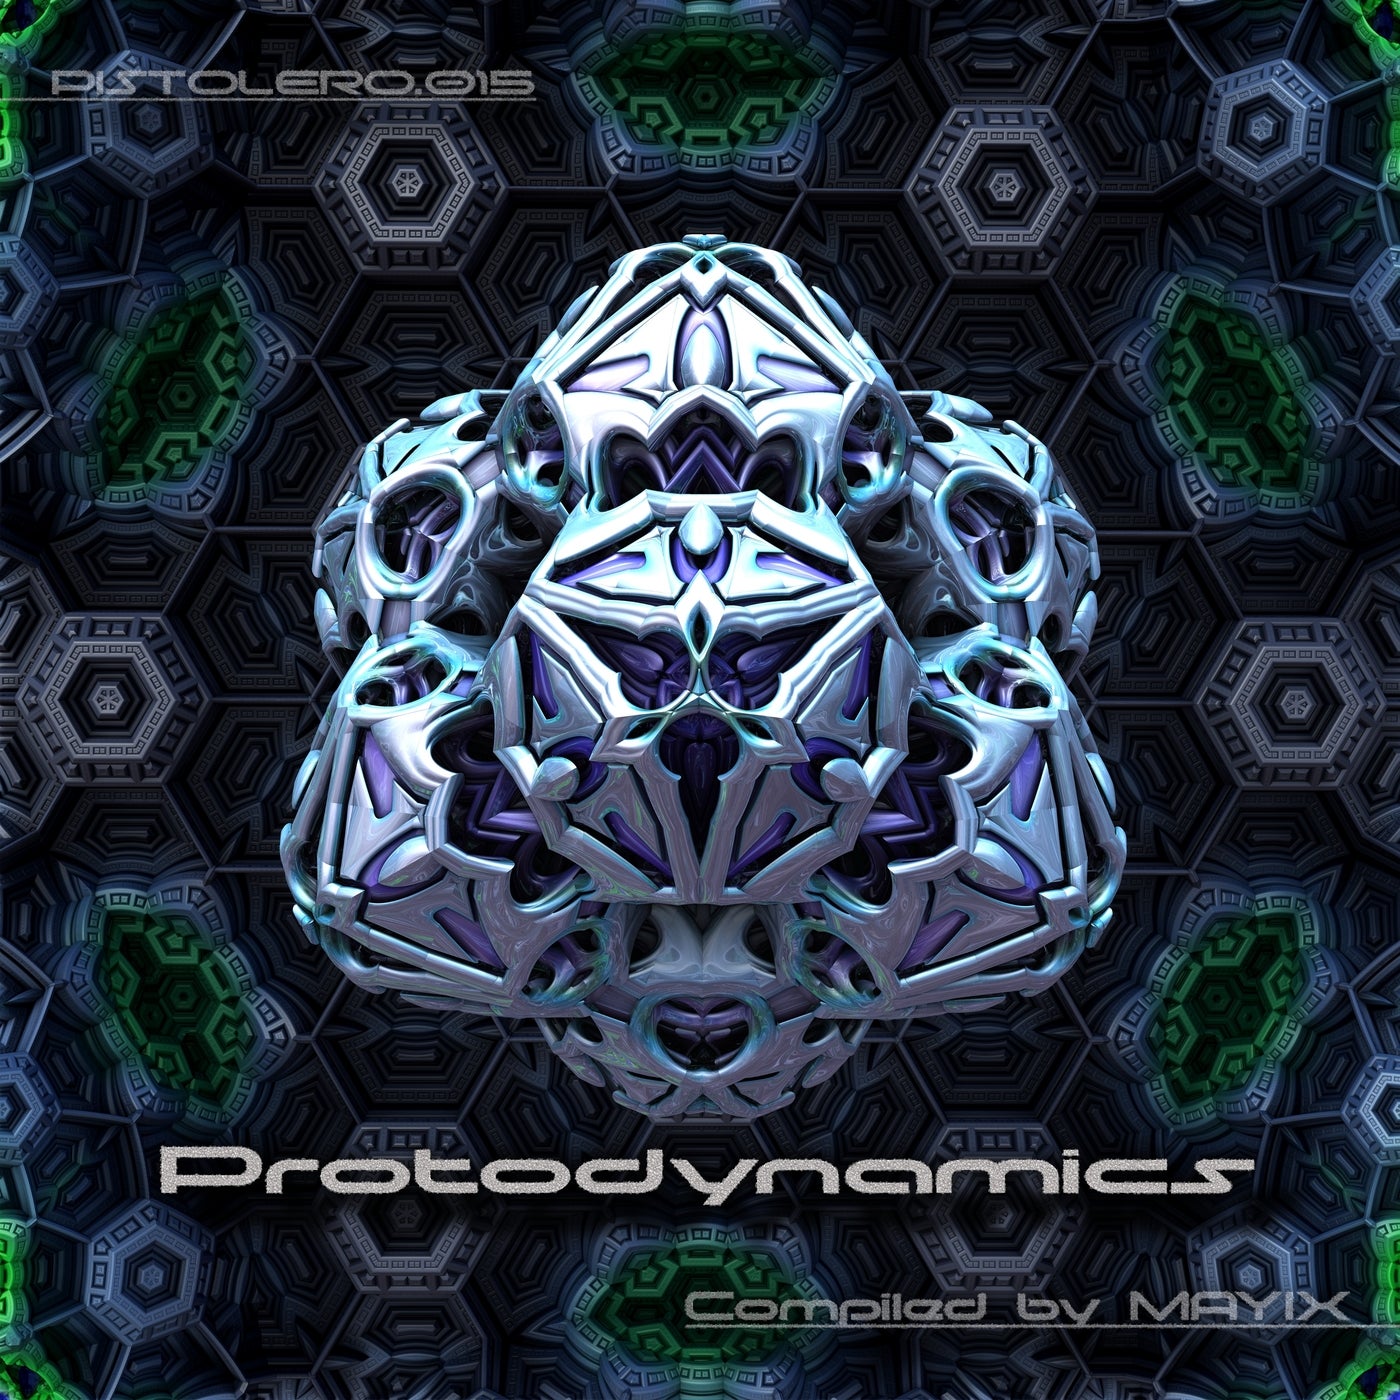 Protodynamics (Compiled by Zmayo)